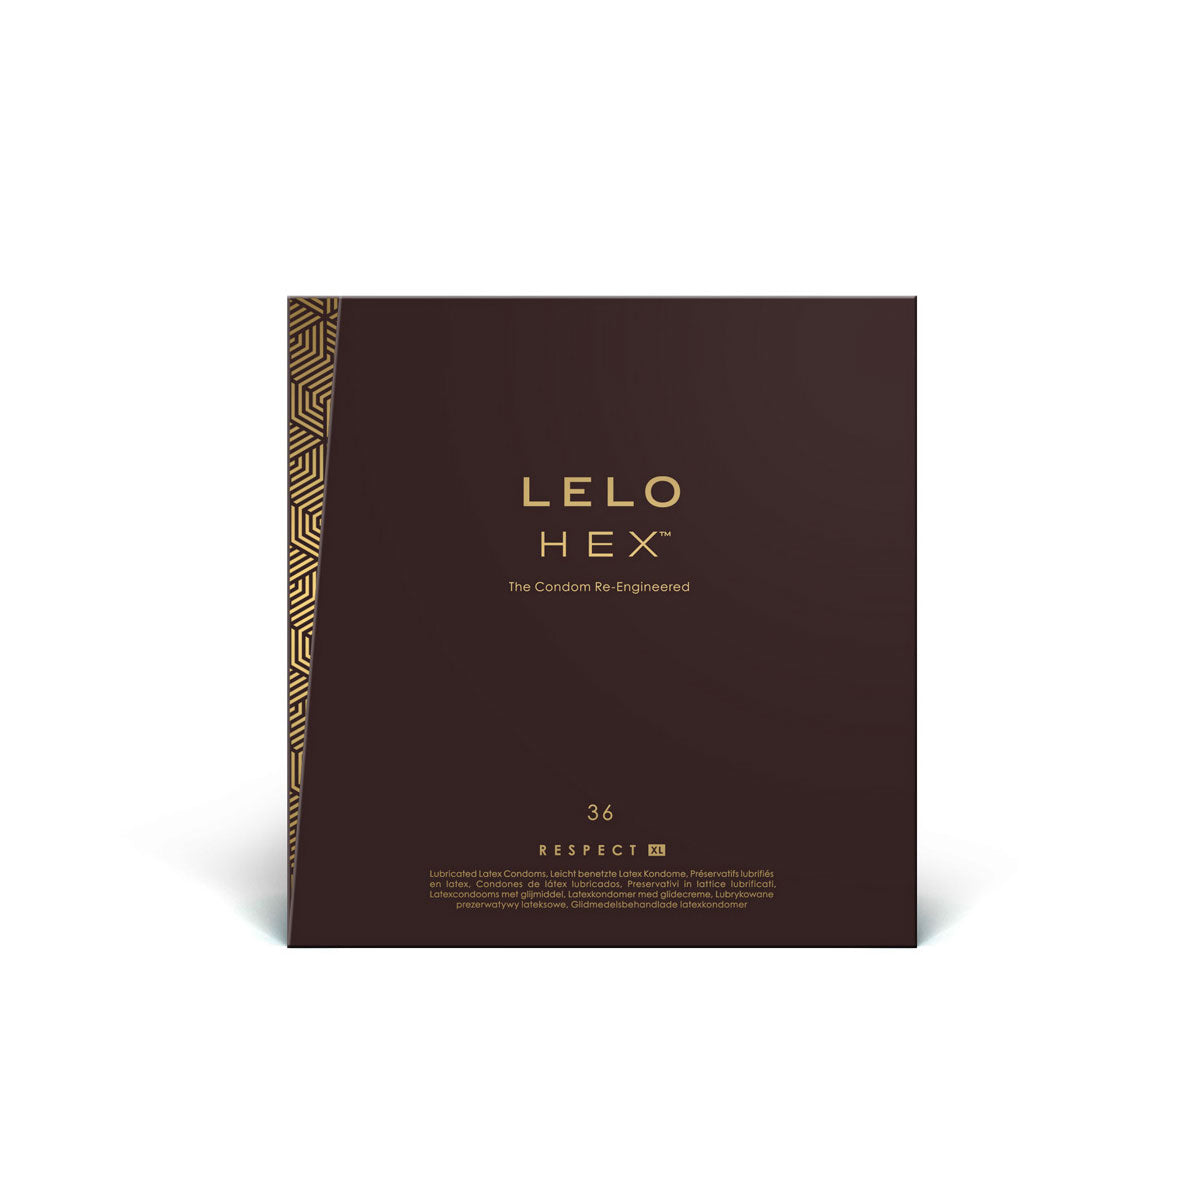 LELO Hex Respect XL Condoms 36 pk